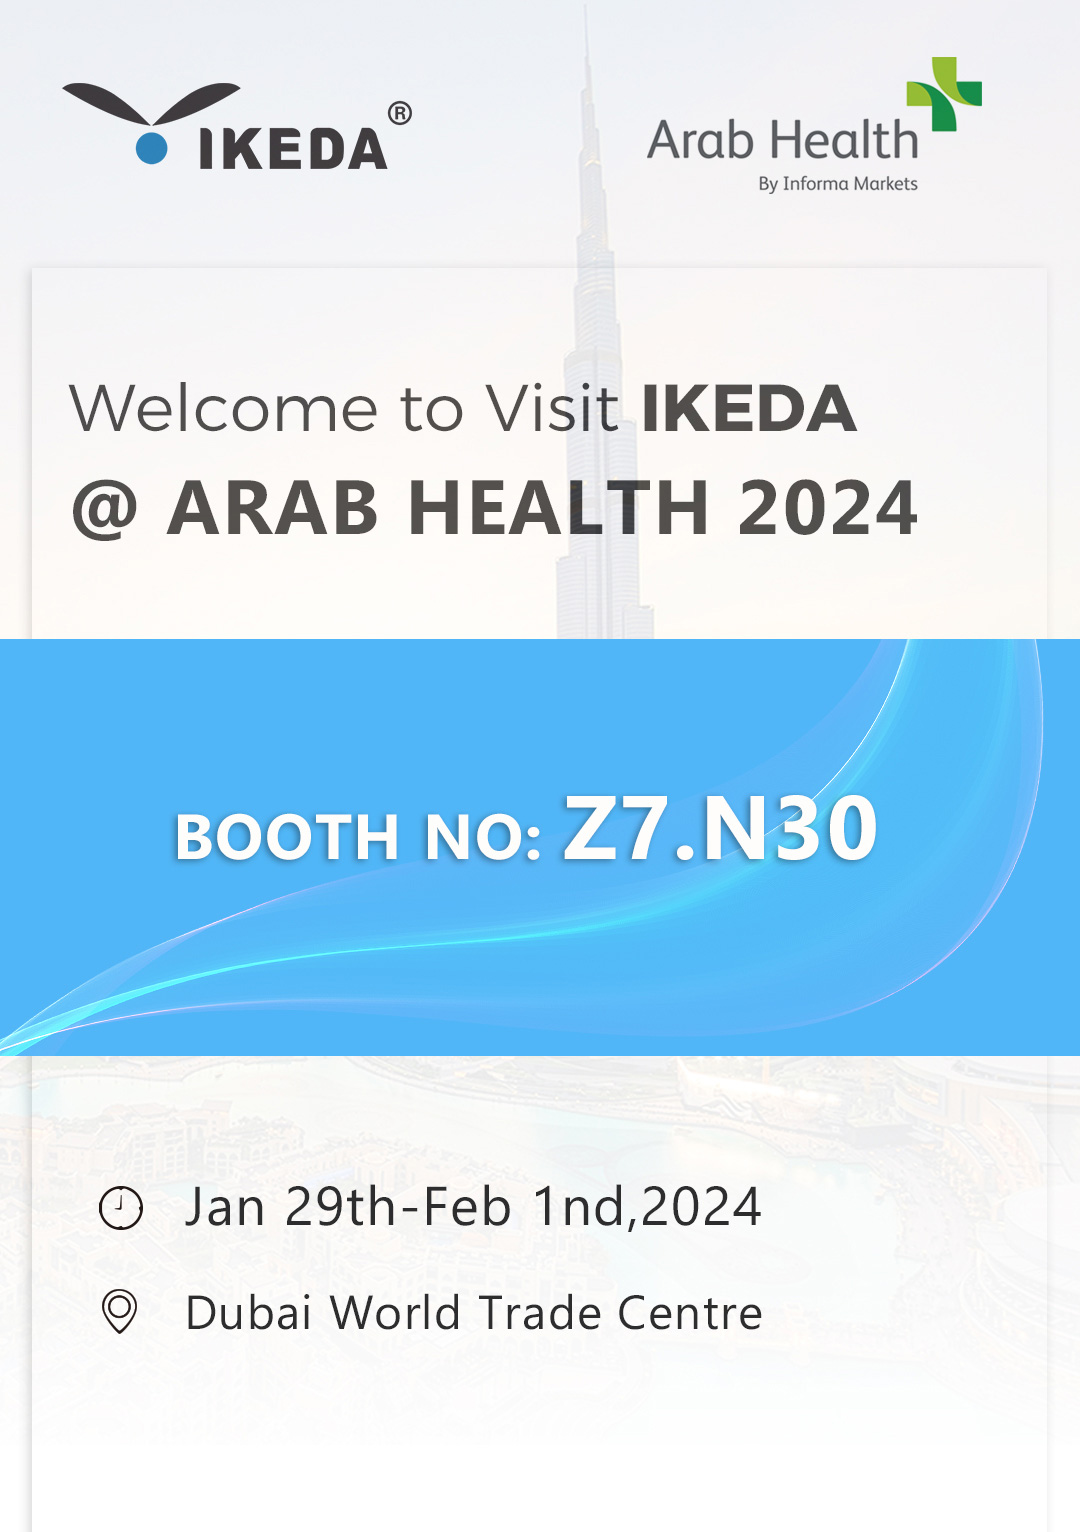 Arab Health 2024，益柯达邀您相见！